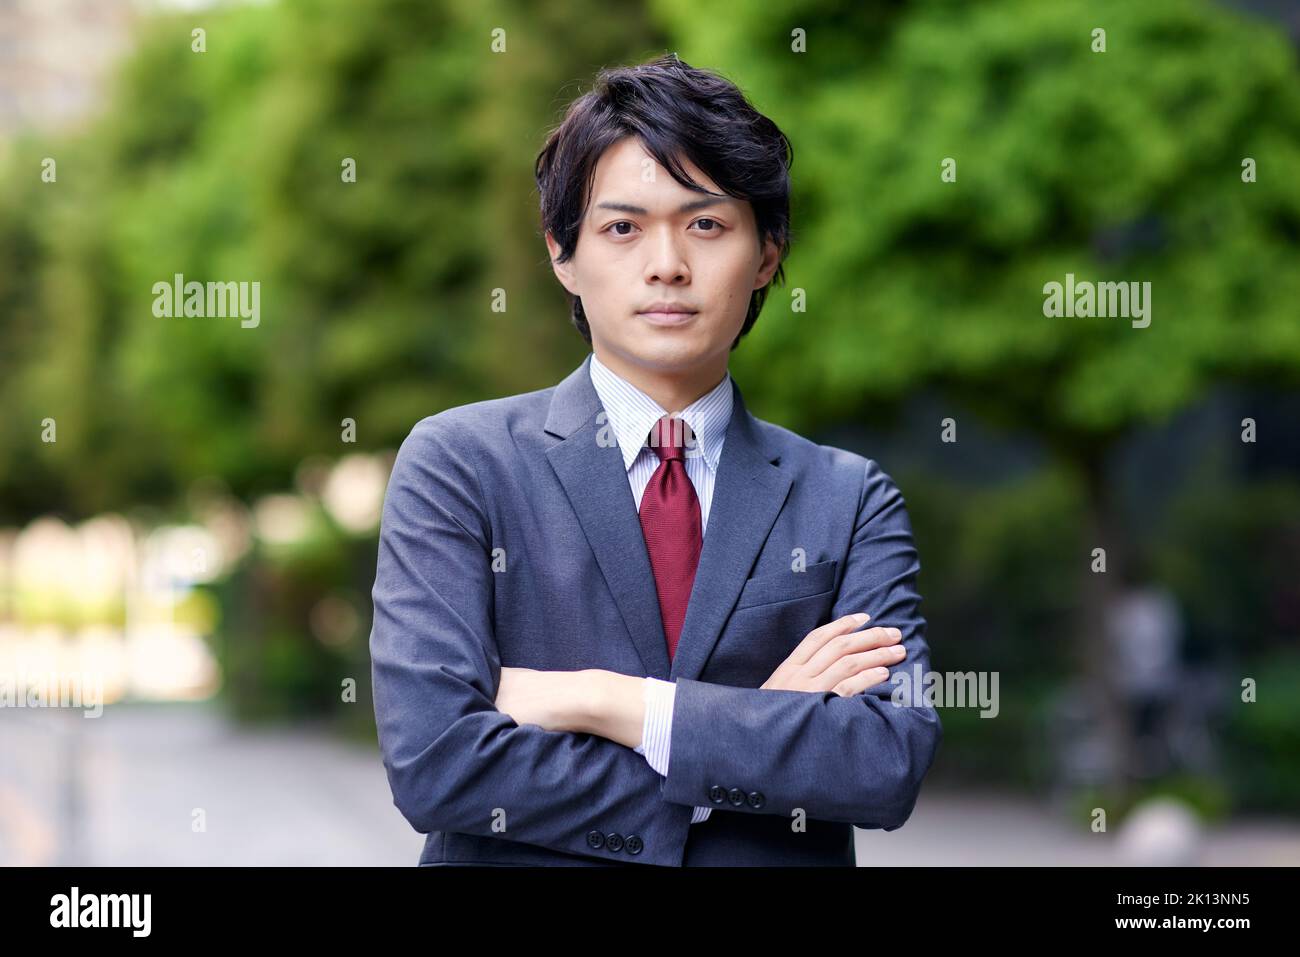 Japanese businessman portrait Stock Photo